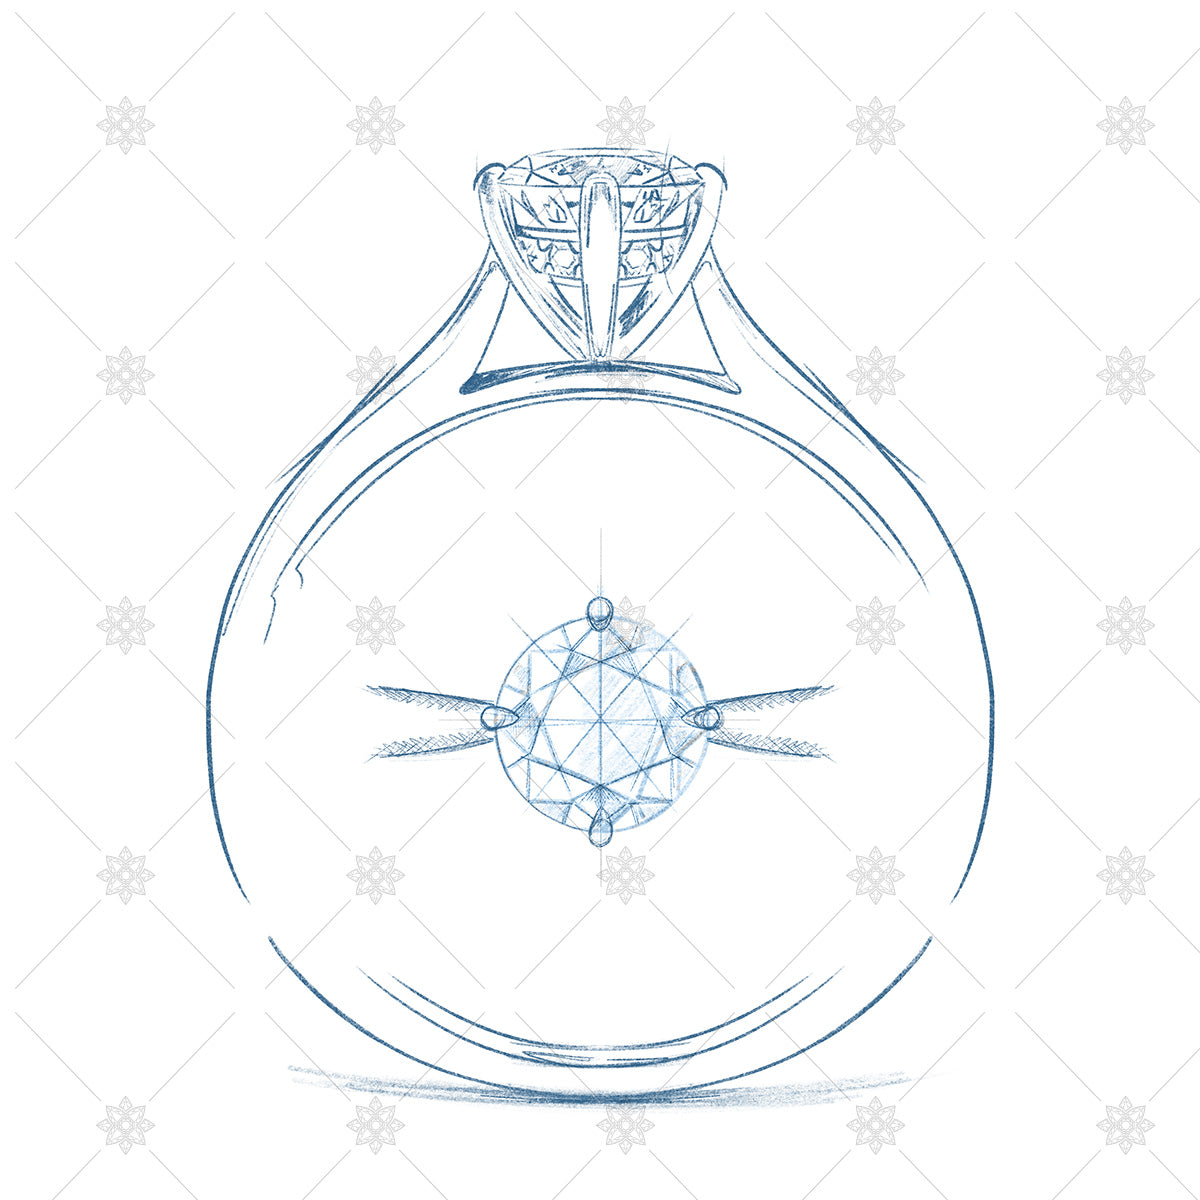 Sketch of a diamond ring - jewellery design 